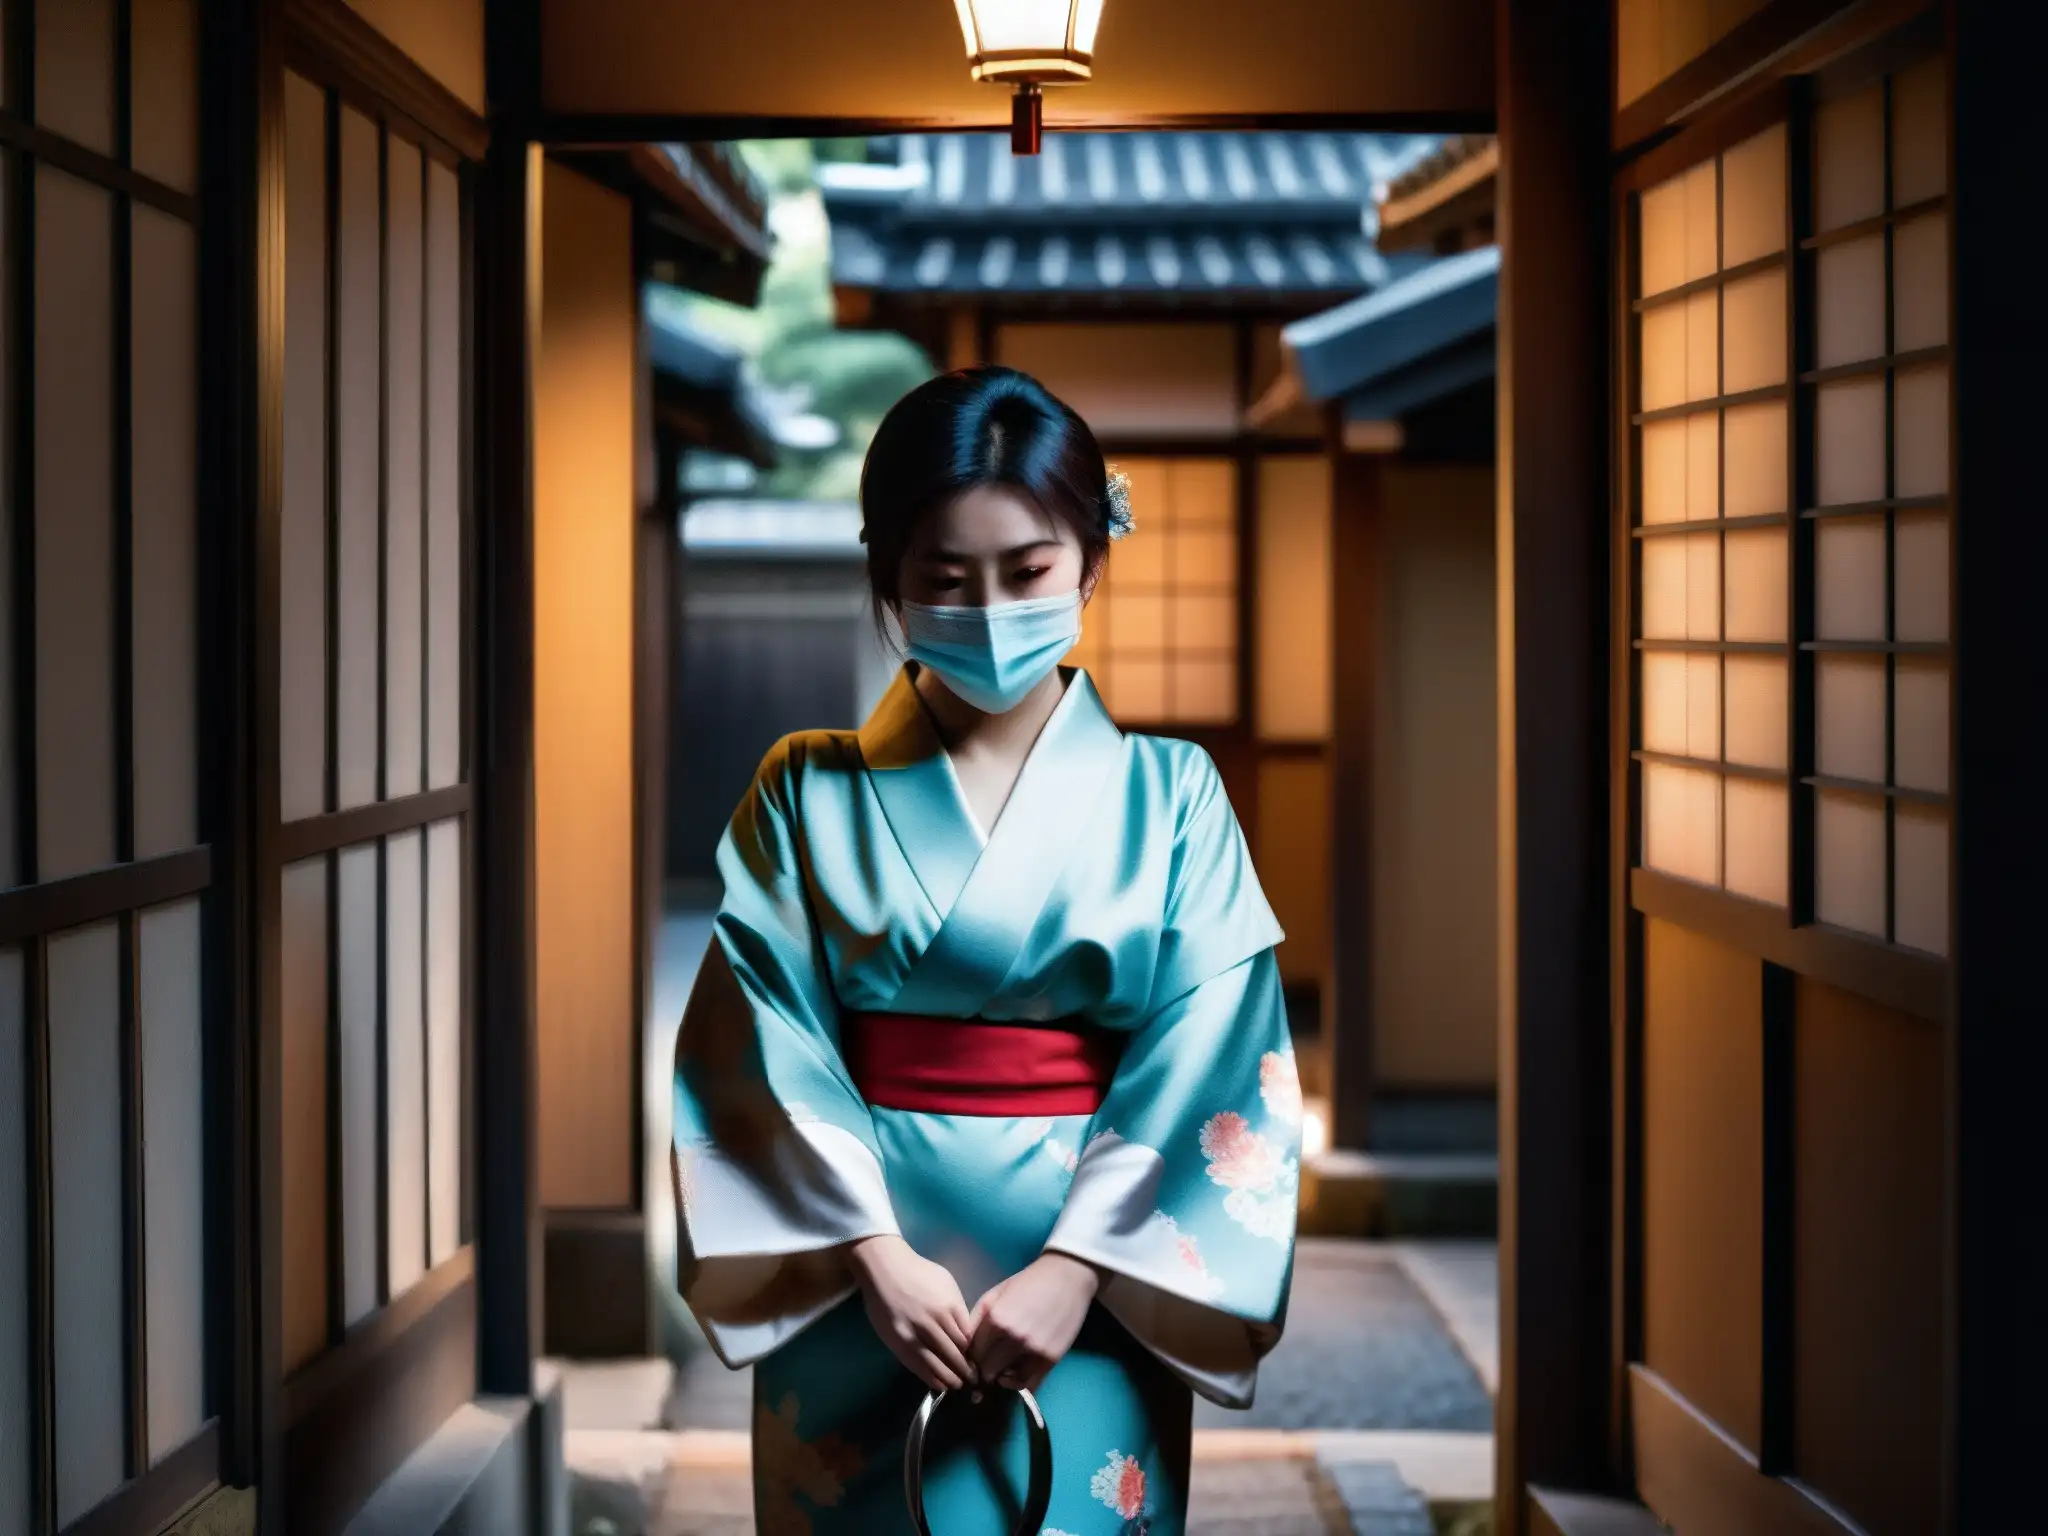 La misteriosa Kushisake Onna en kimono japonés, con un ambiente inquietante